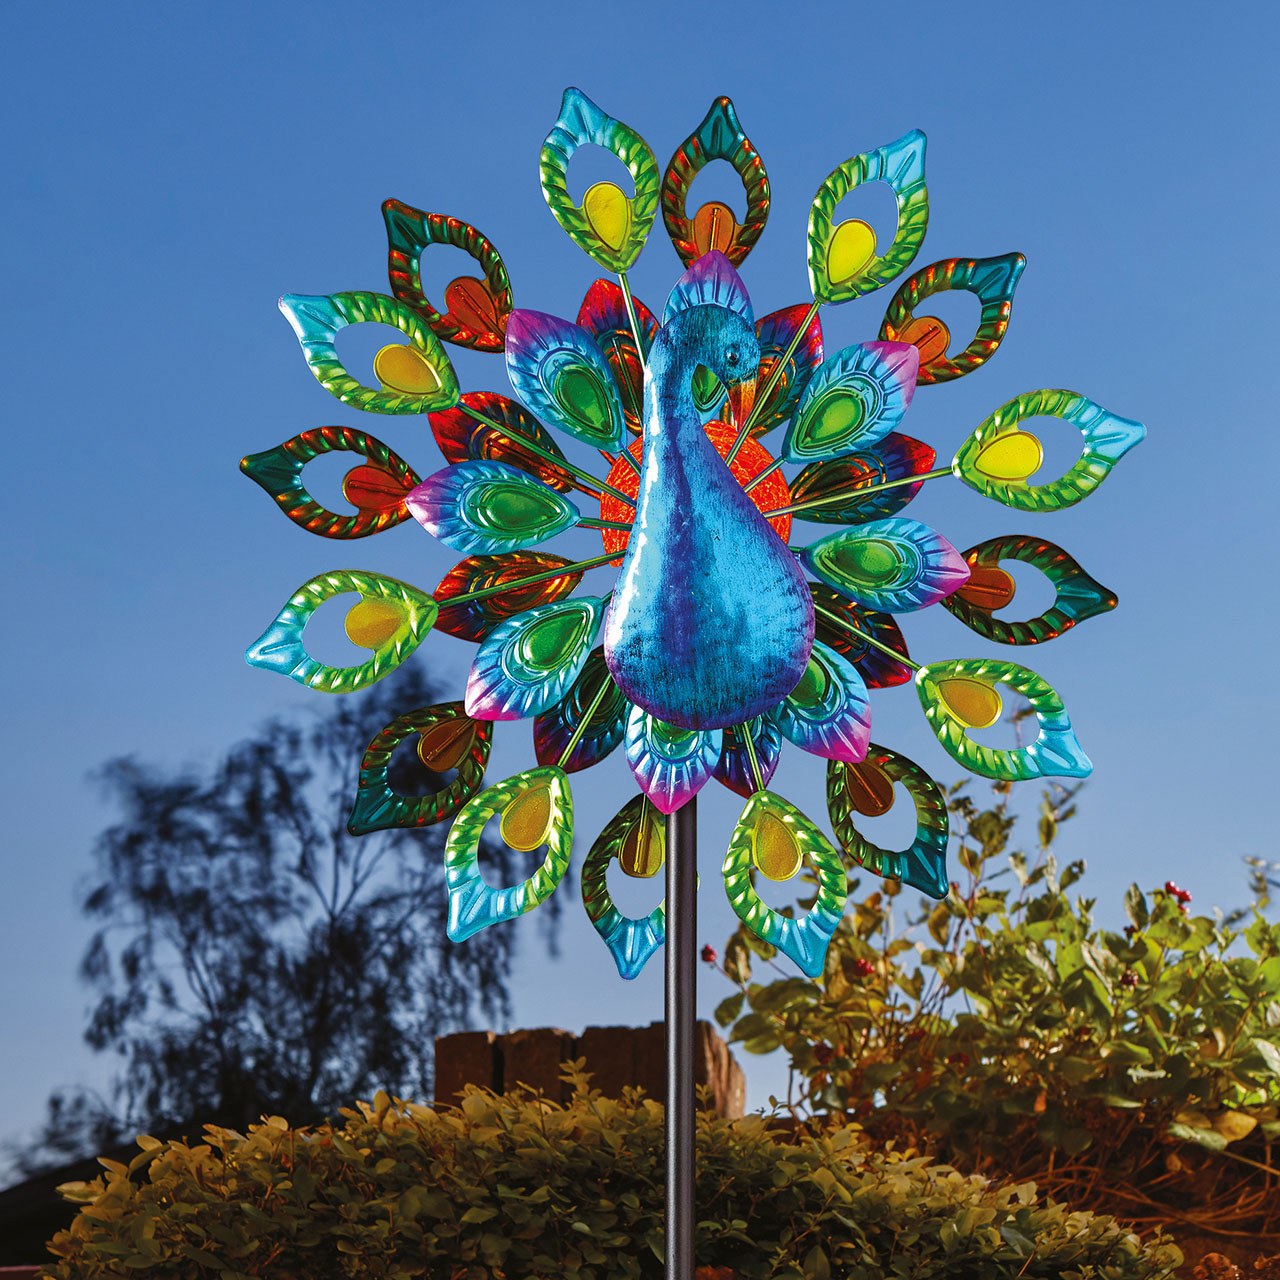 Peacock Solar Wind Spinner